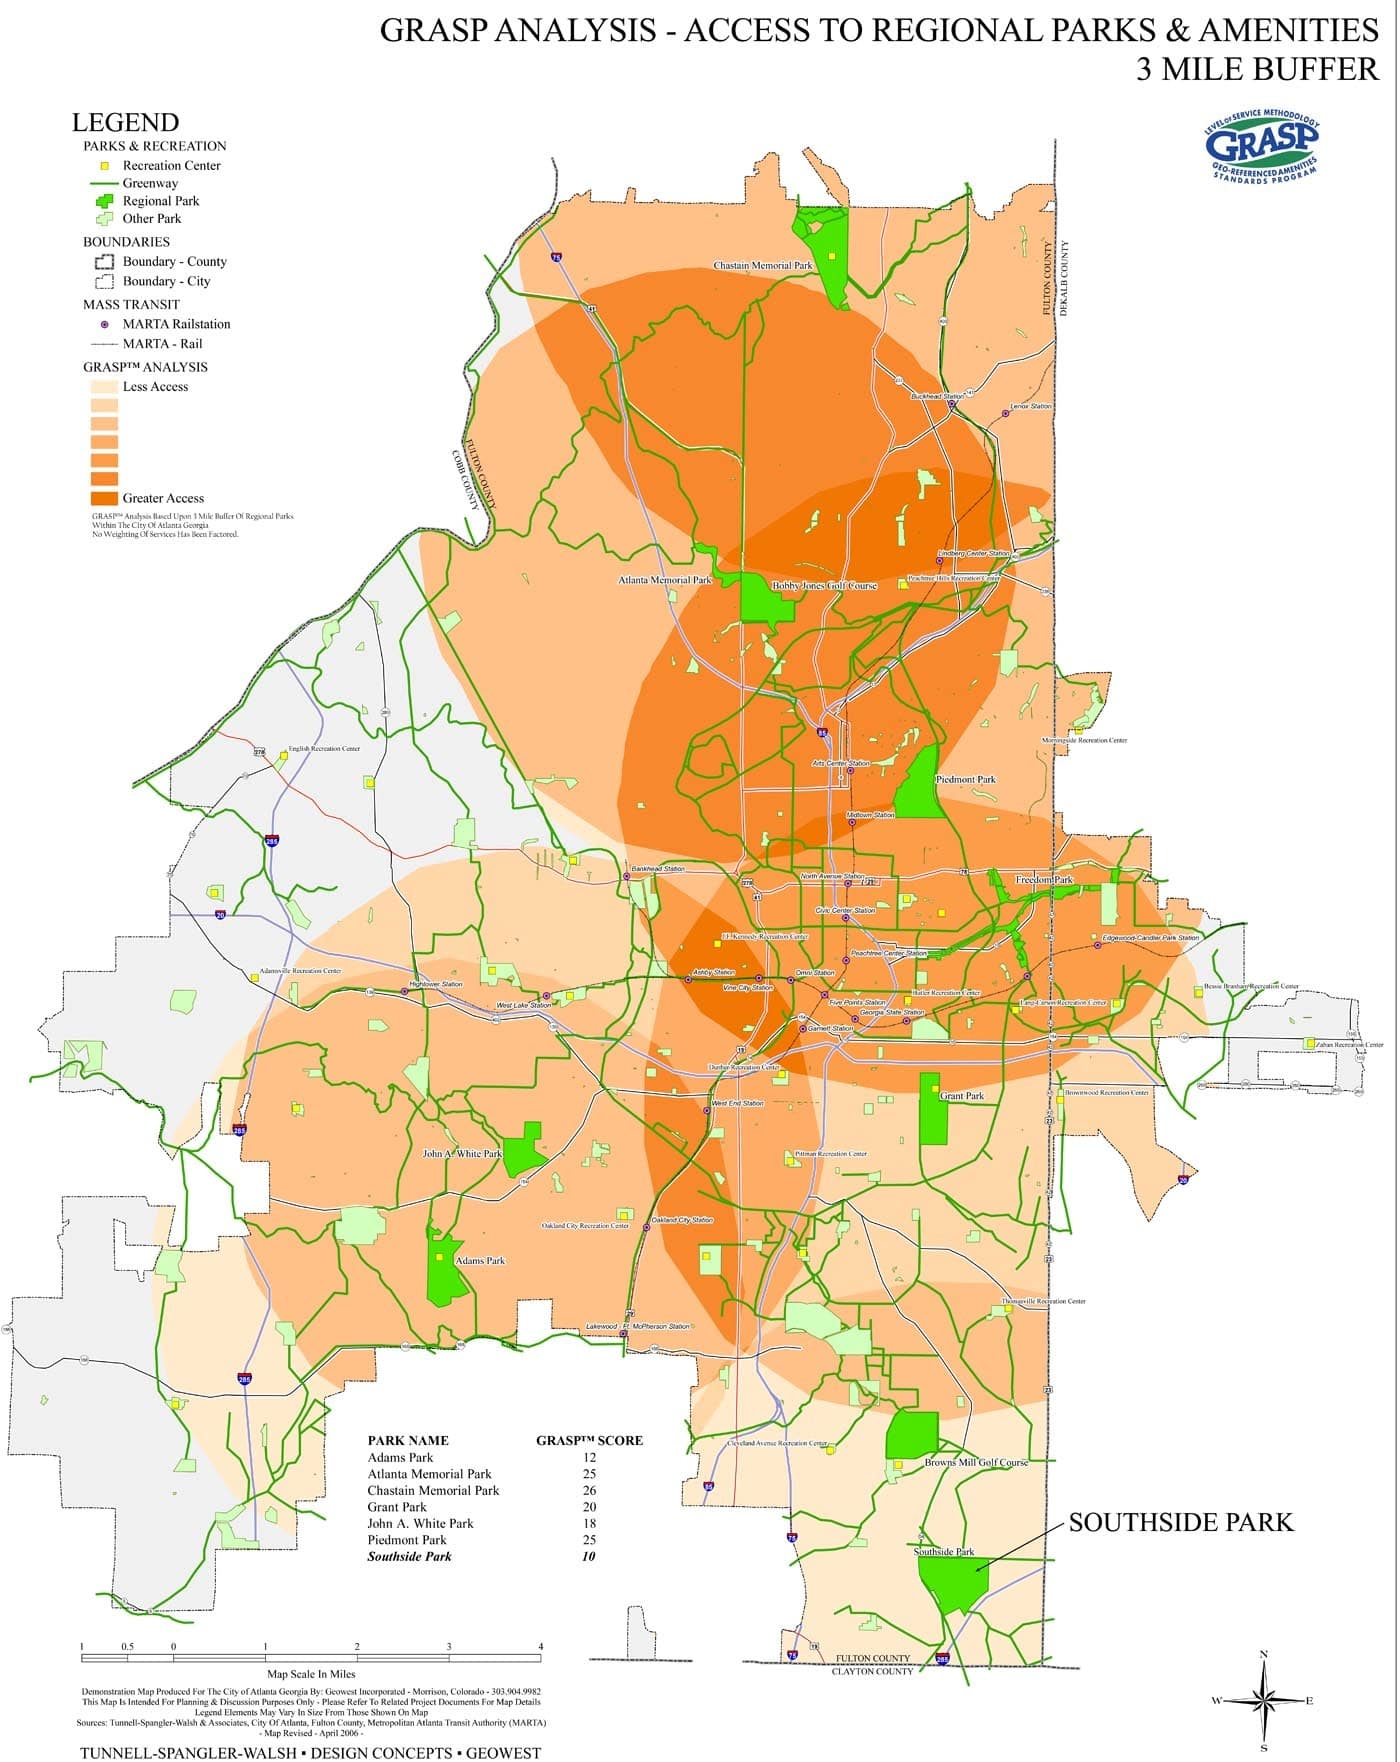 Southside Park Master Plan- TSW Planning Architecture Landscape Architecture, Atlanta